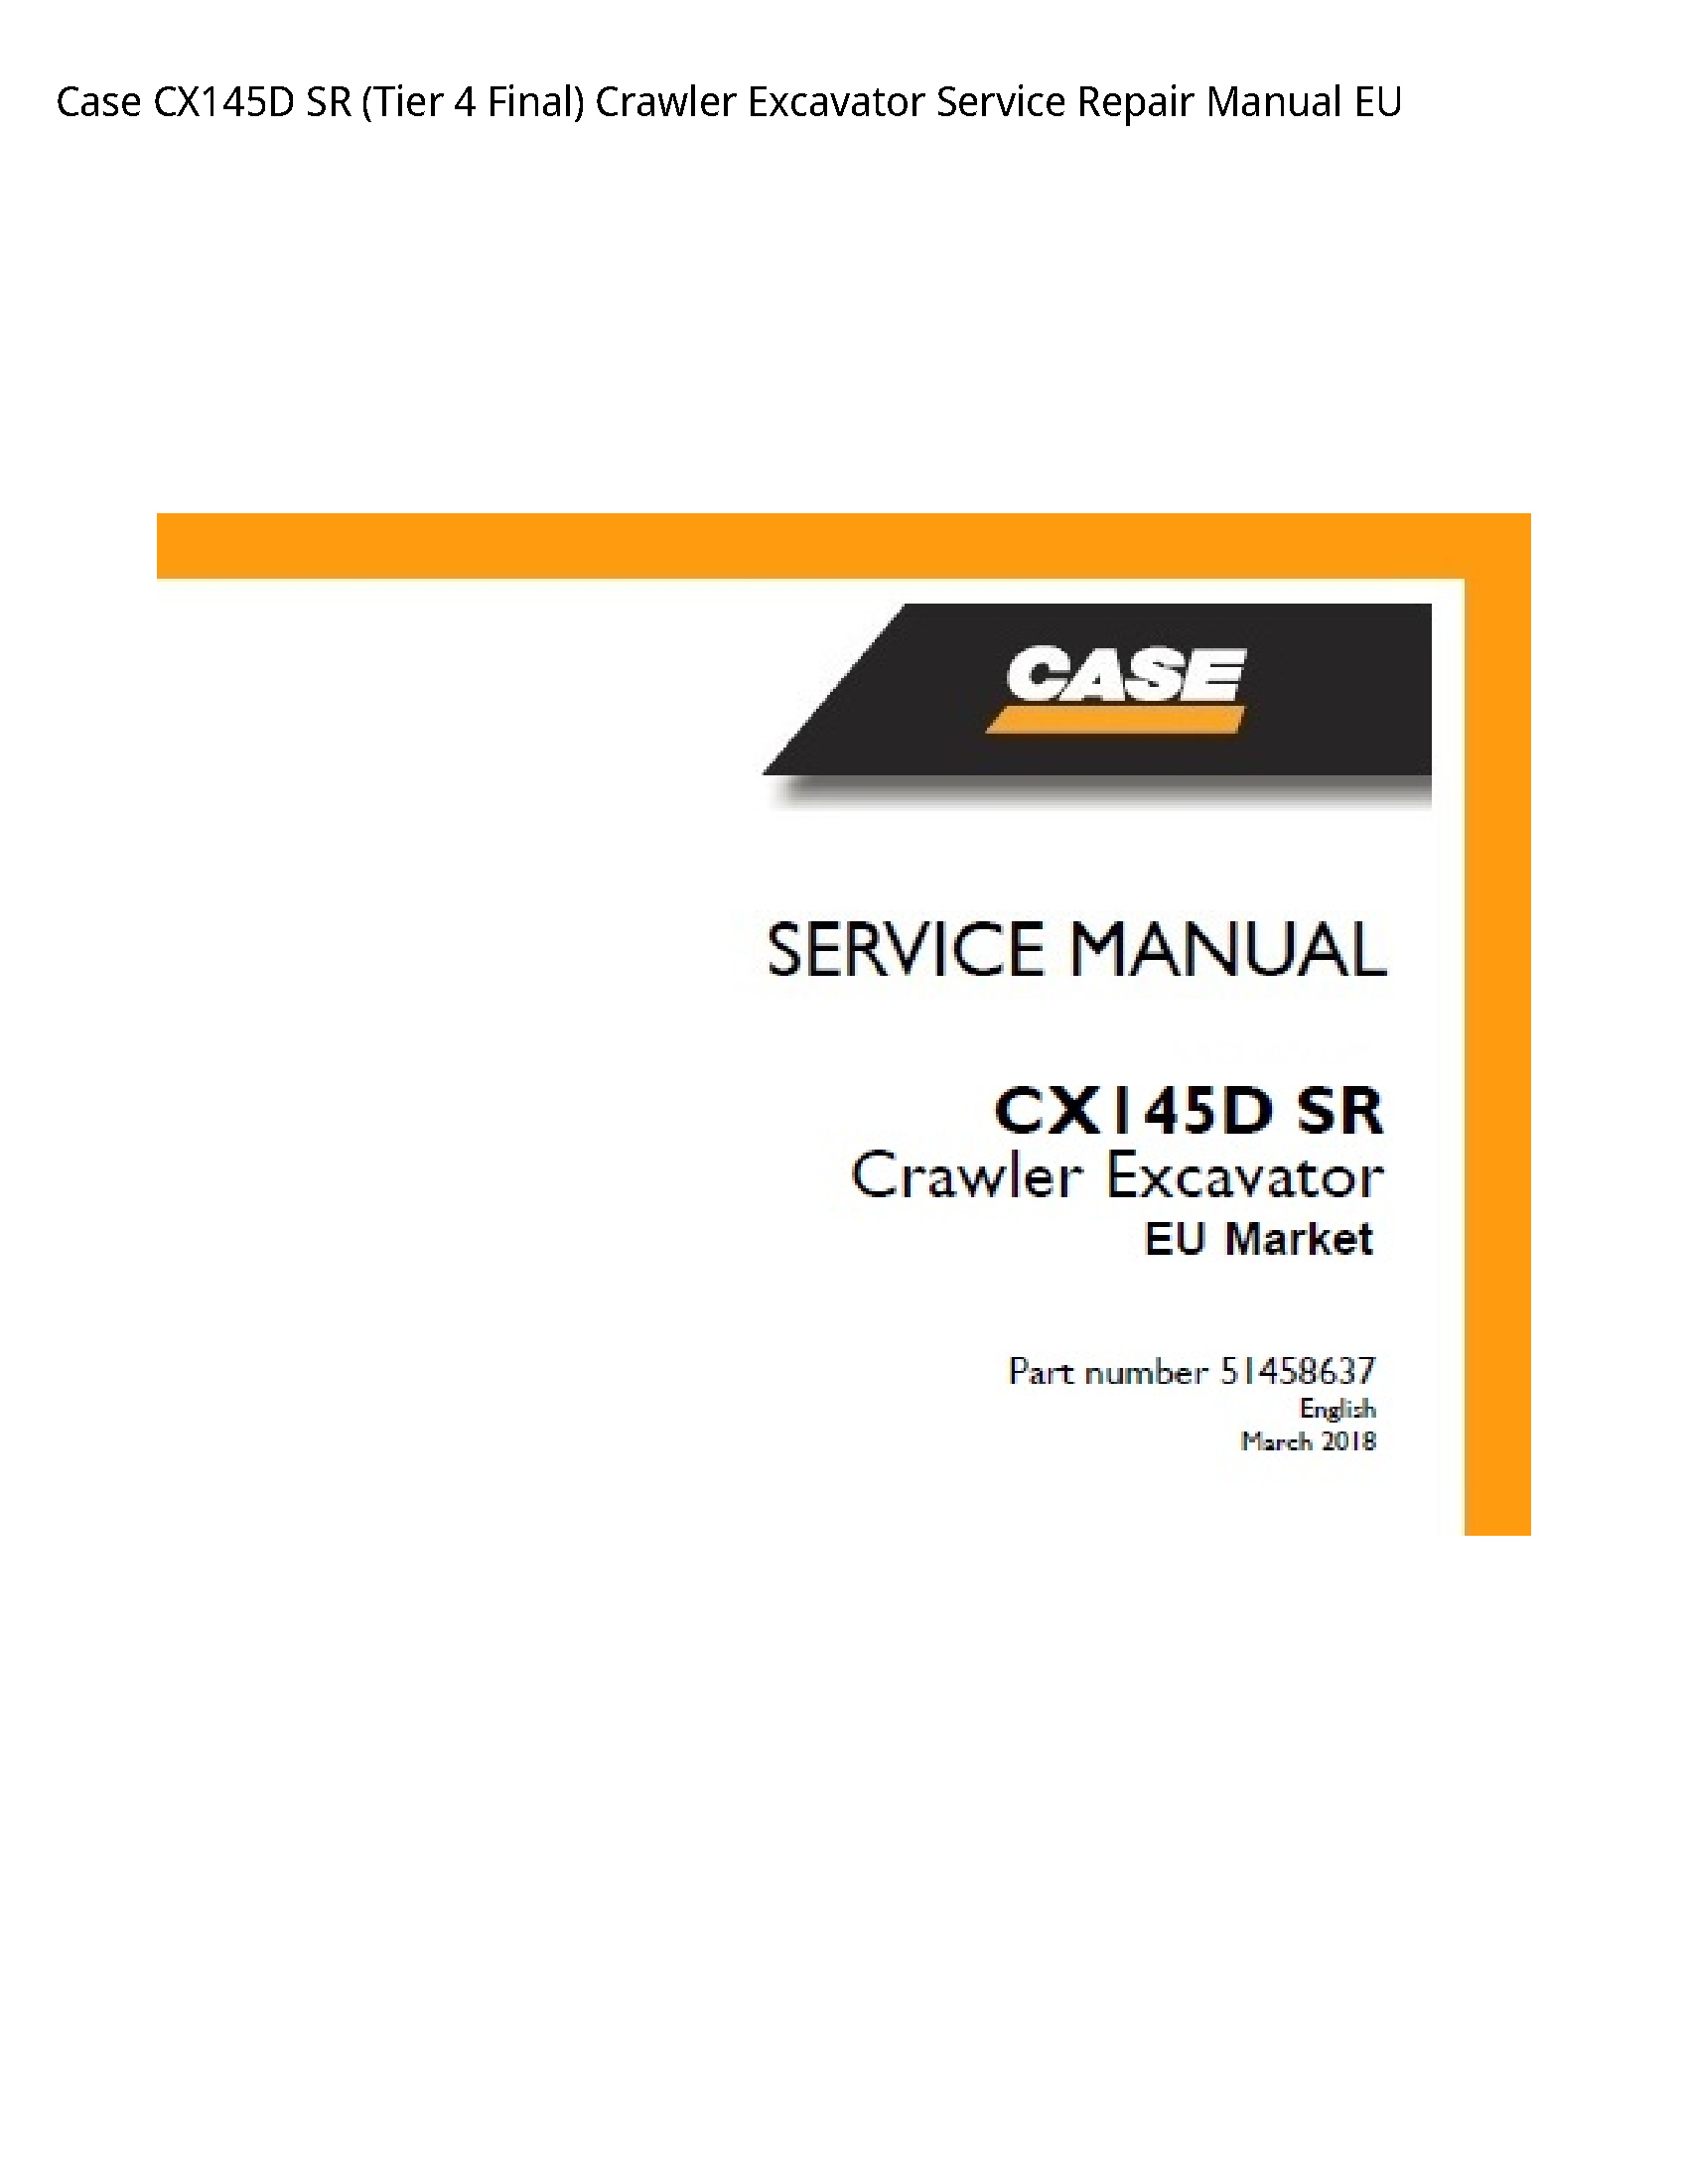 Case/Case IH CX145D SR (Tier Final) Crawler Excavator manual